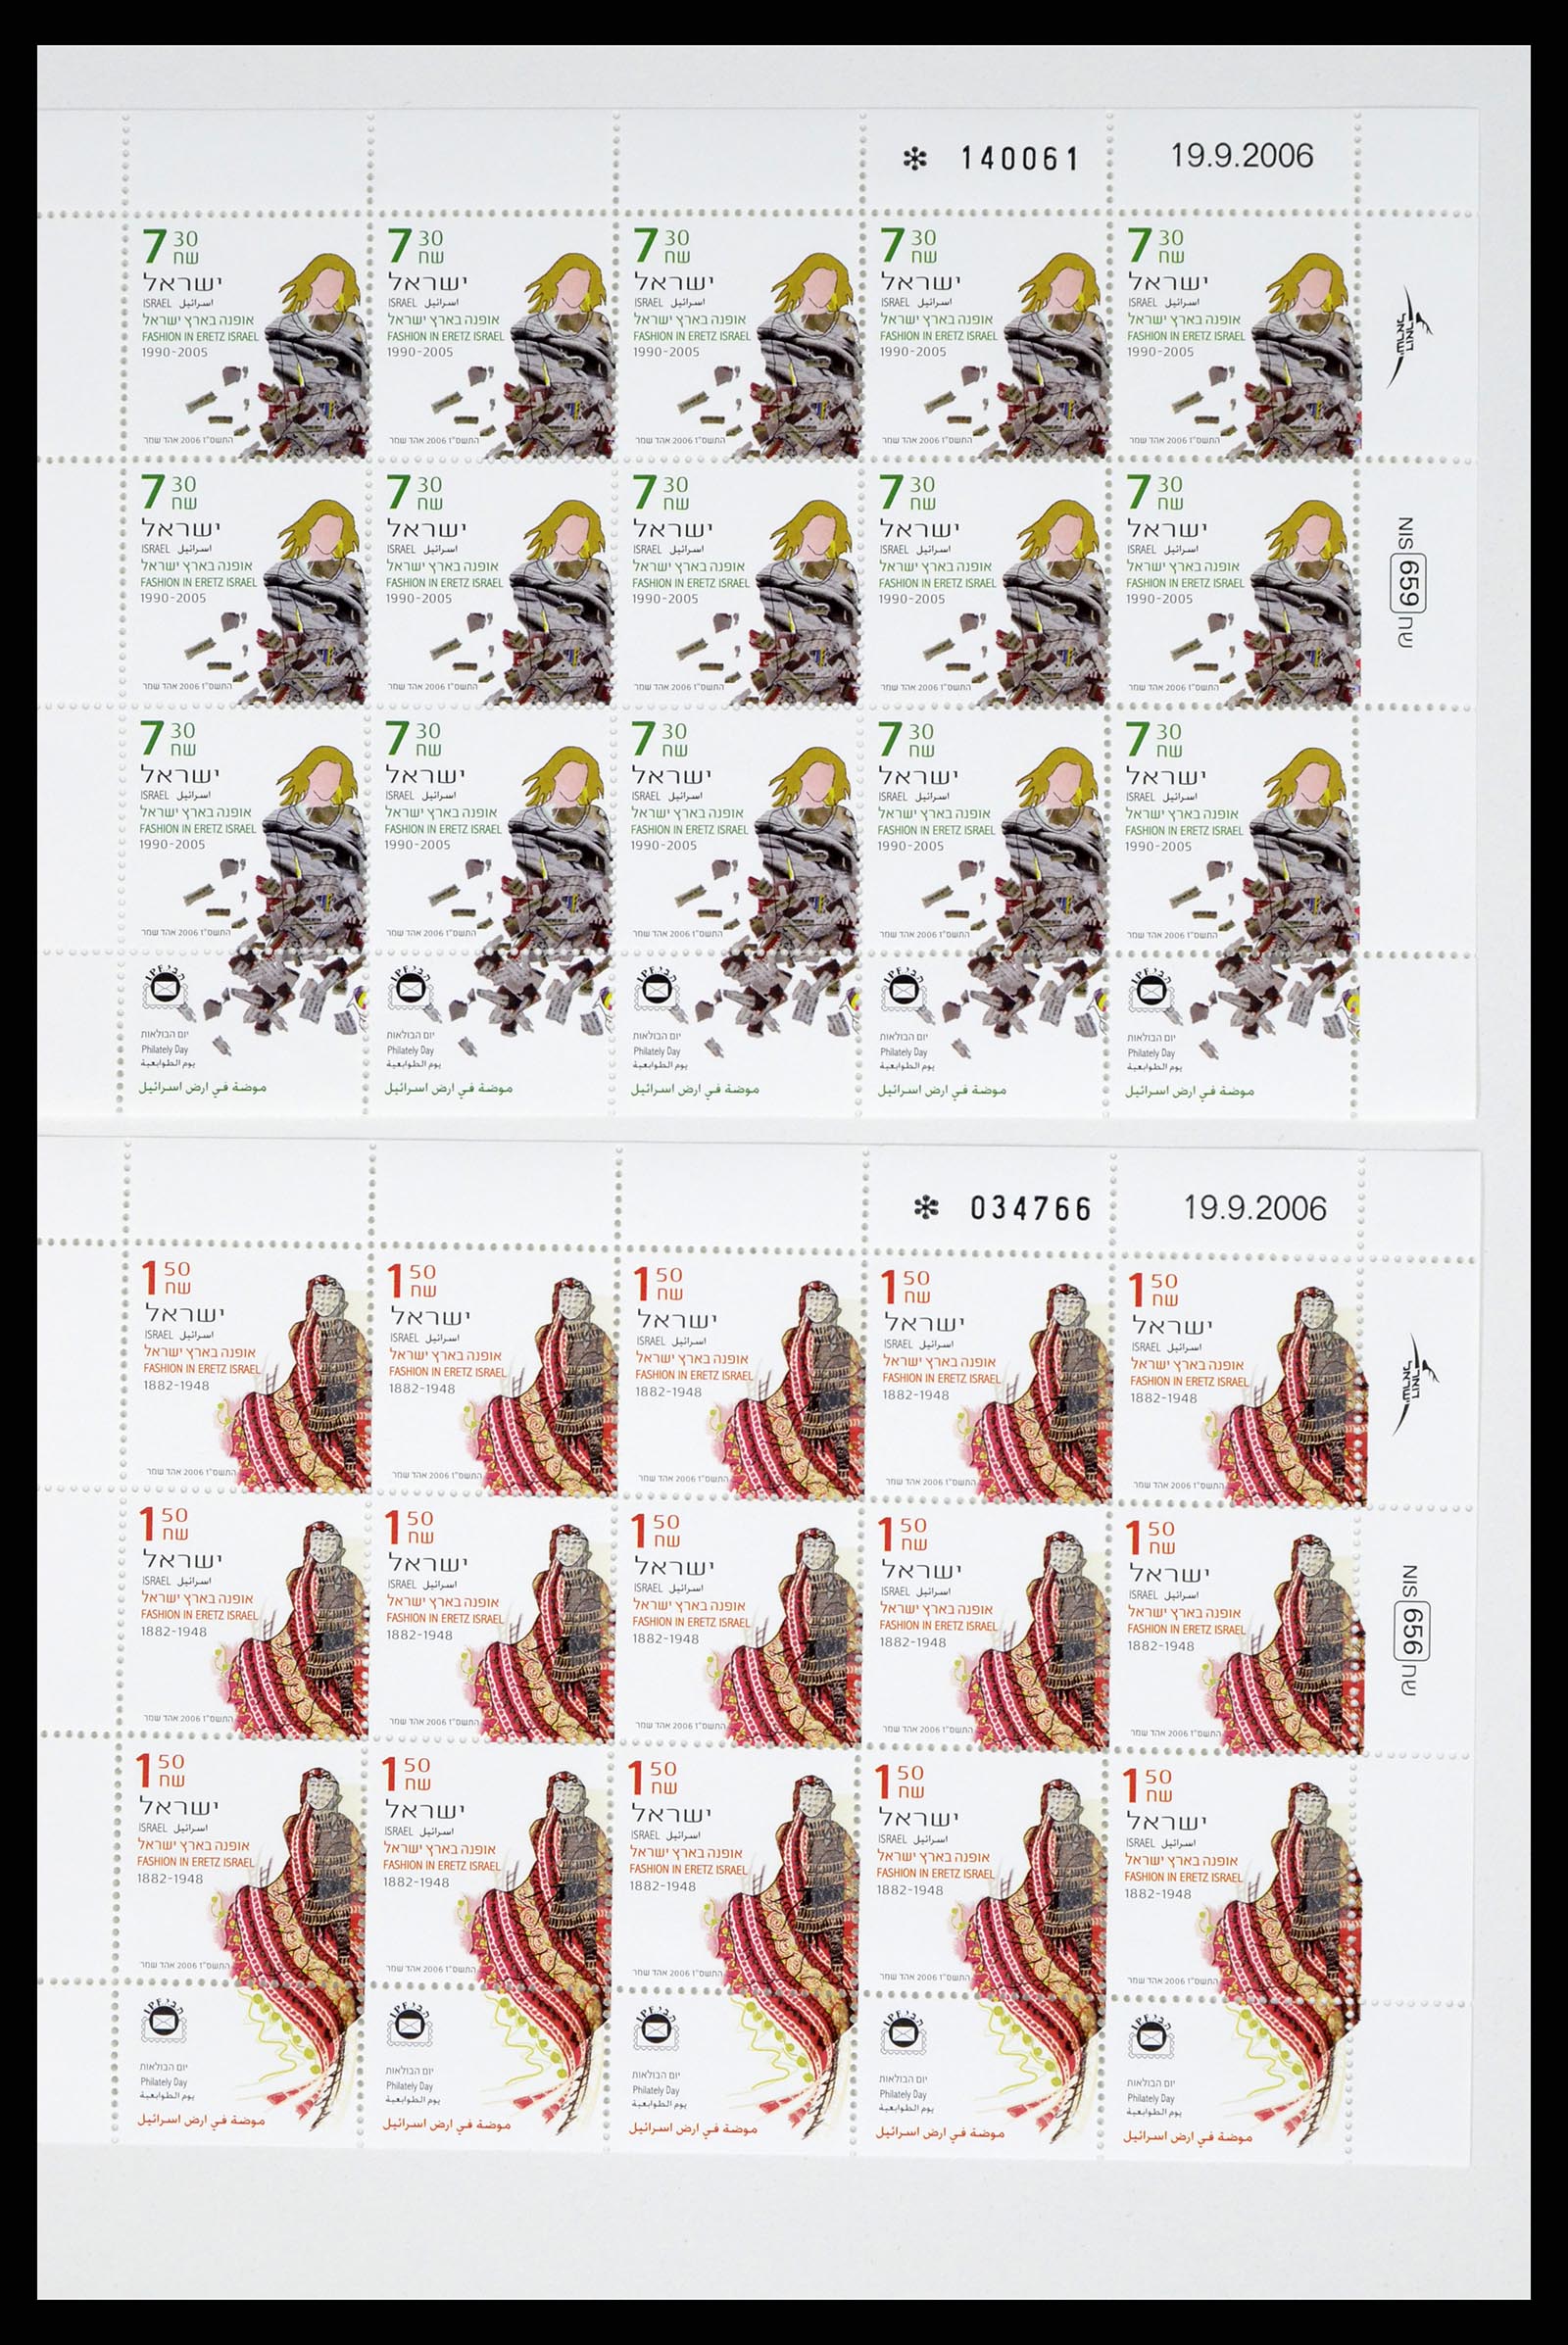 37779 018 - Stamp collection 37779 Israel sheetlets 1986-2009.